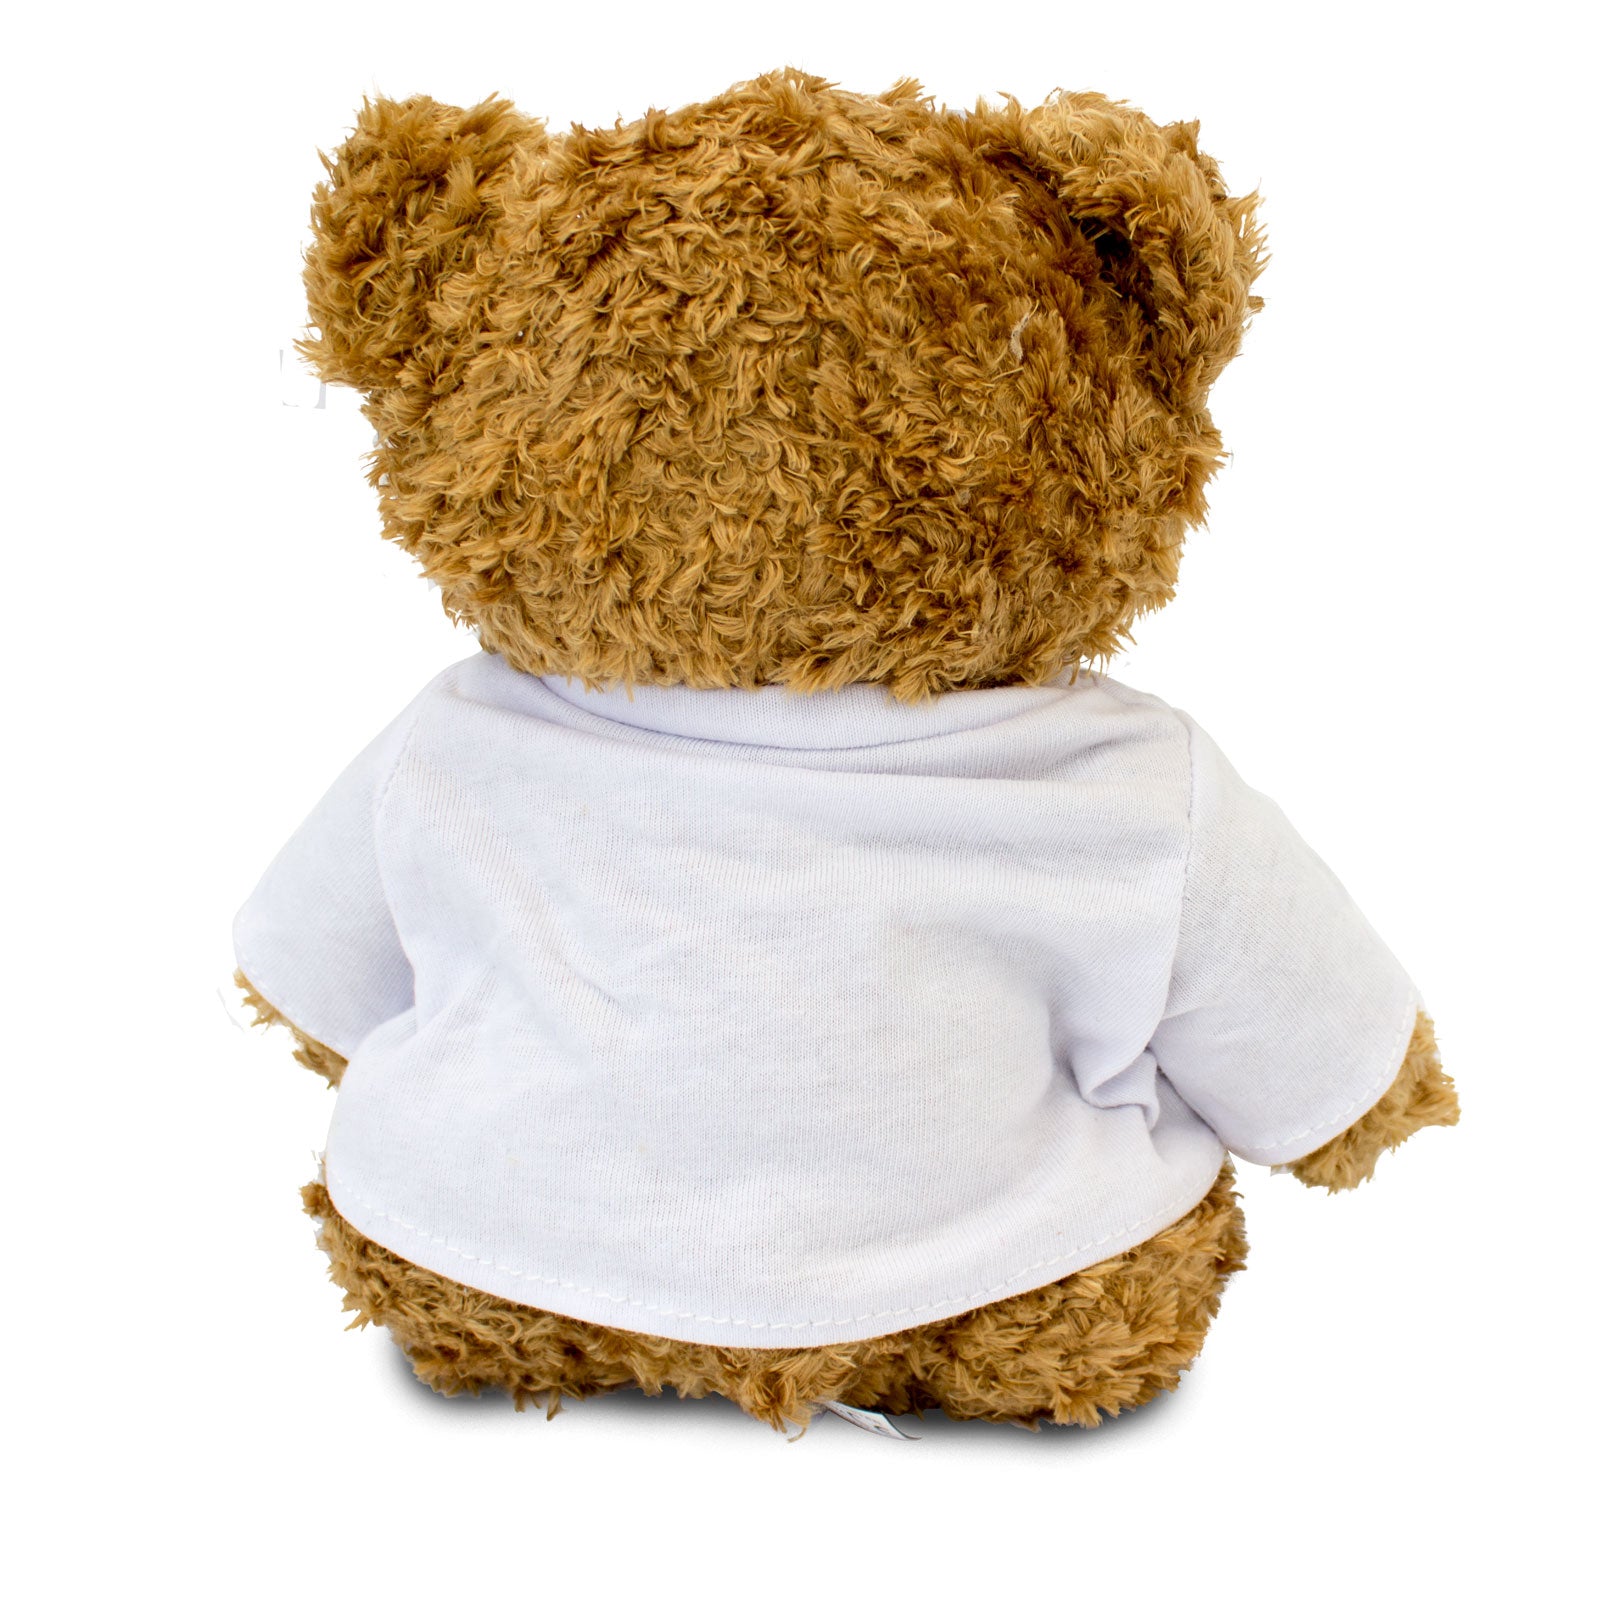 I Love Movies - Teddy Bear